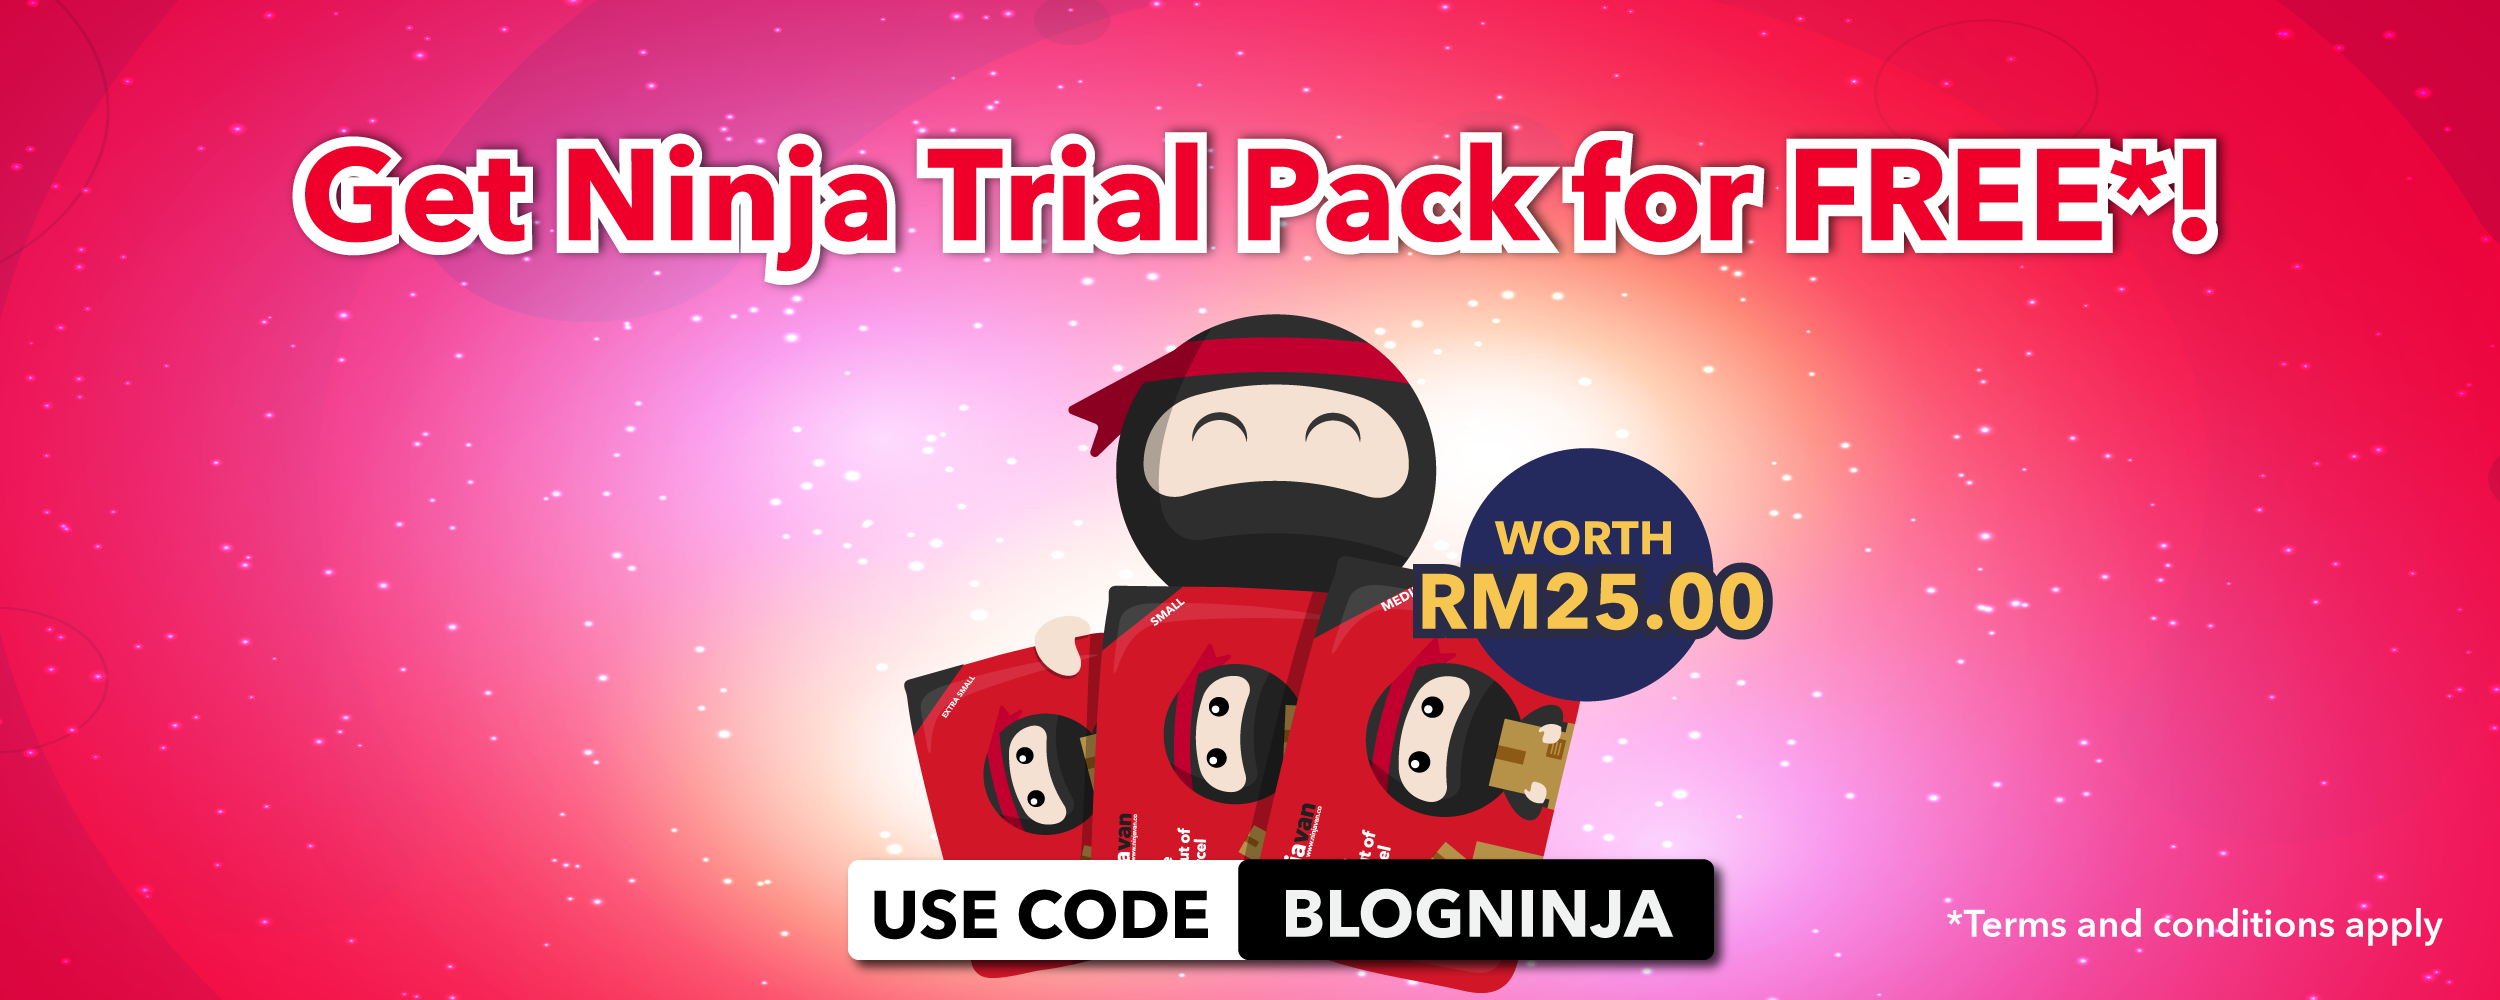 Free ninja trial packs for blog